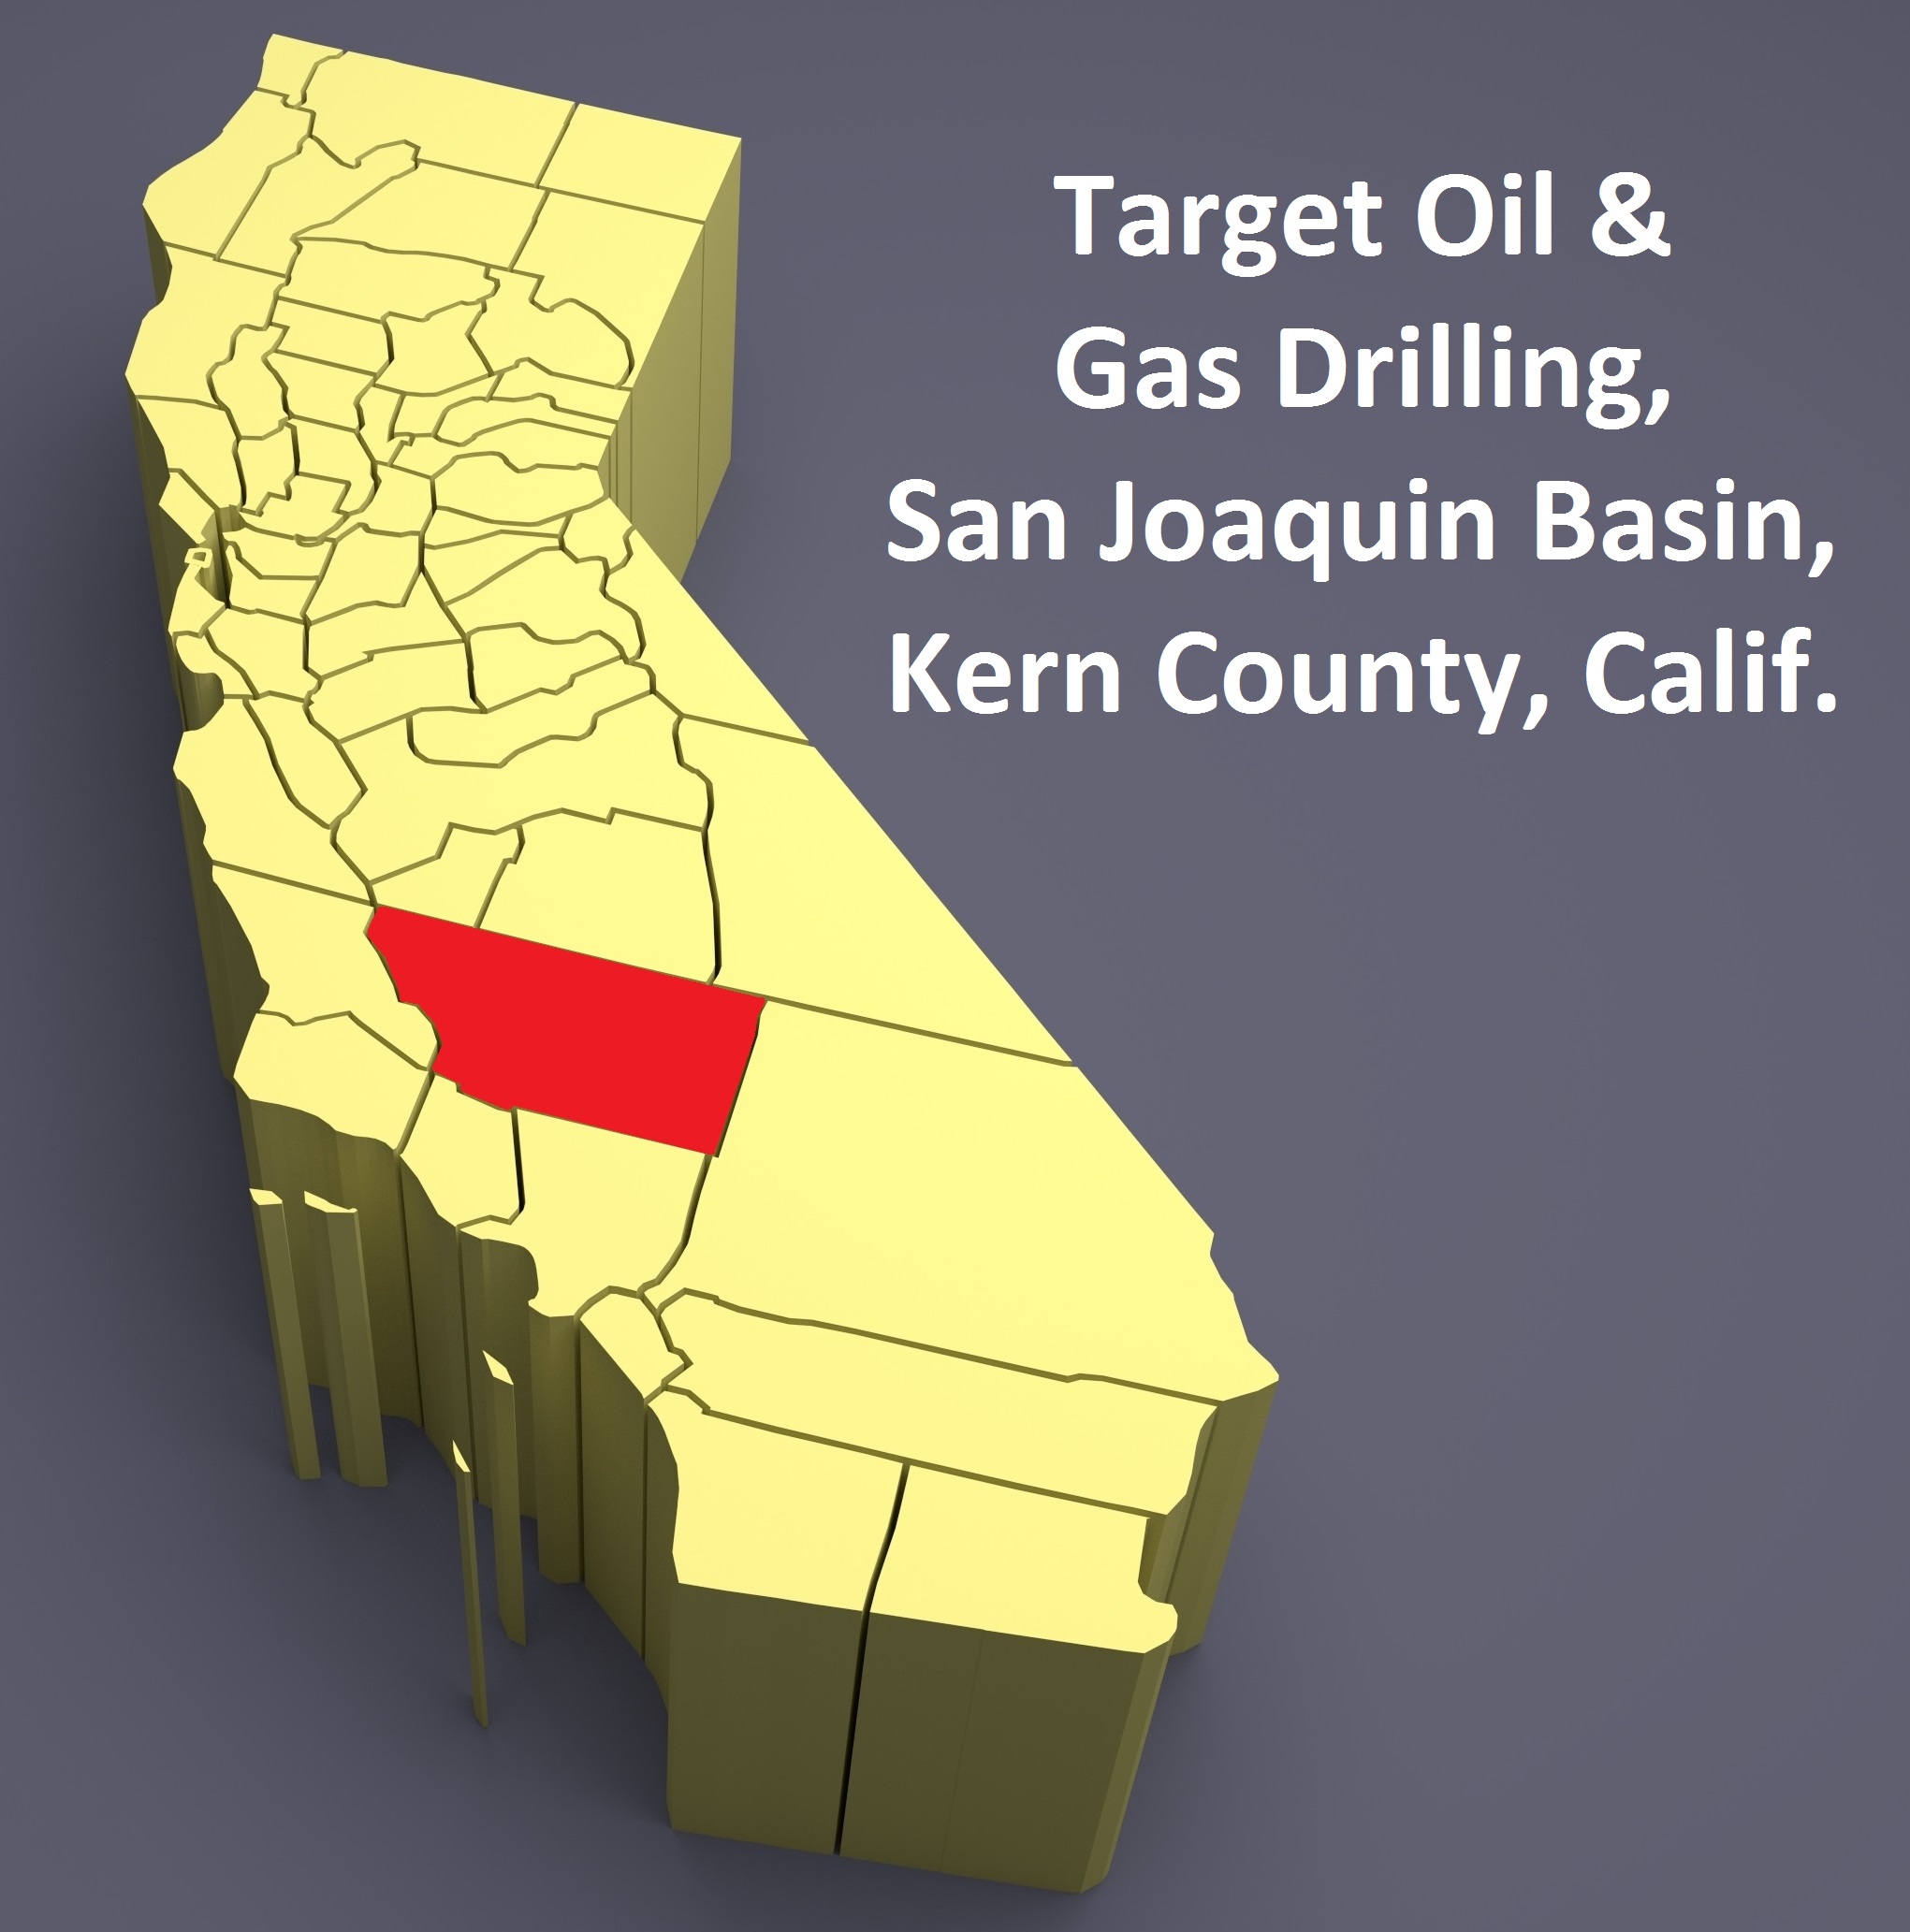 Target Oil & Gas Drilling, San Joaquin Basin, Kern County, Calif.